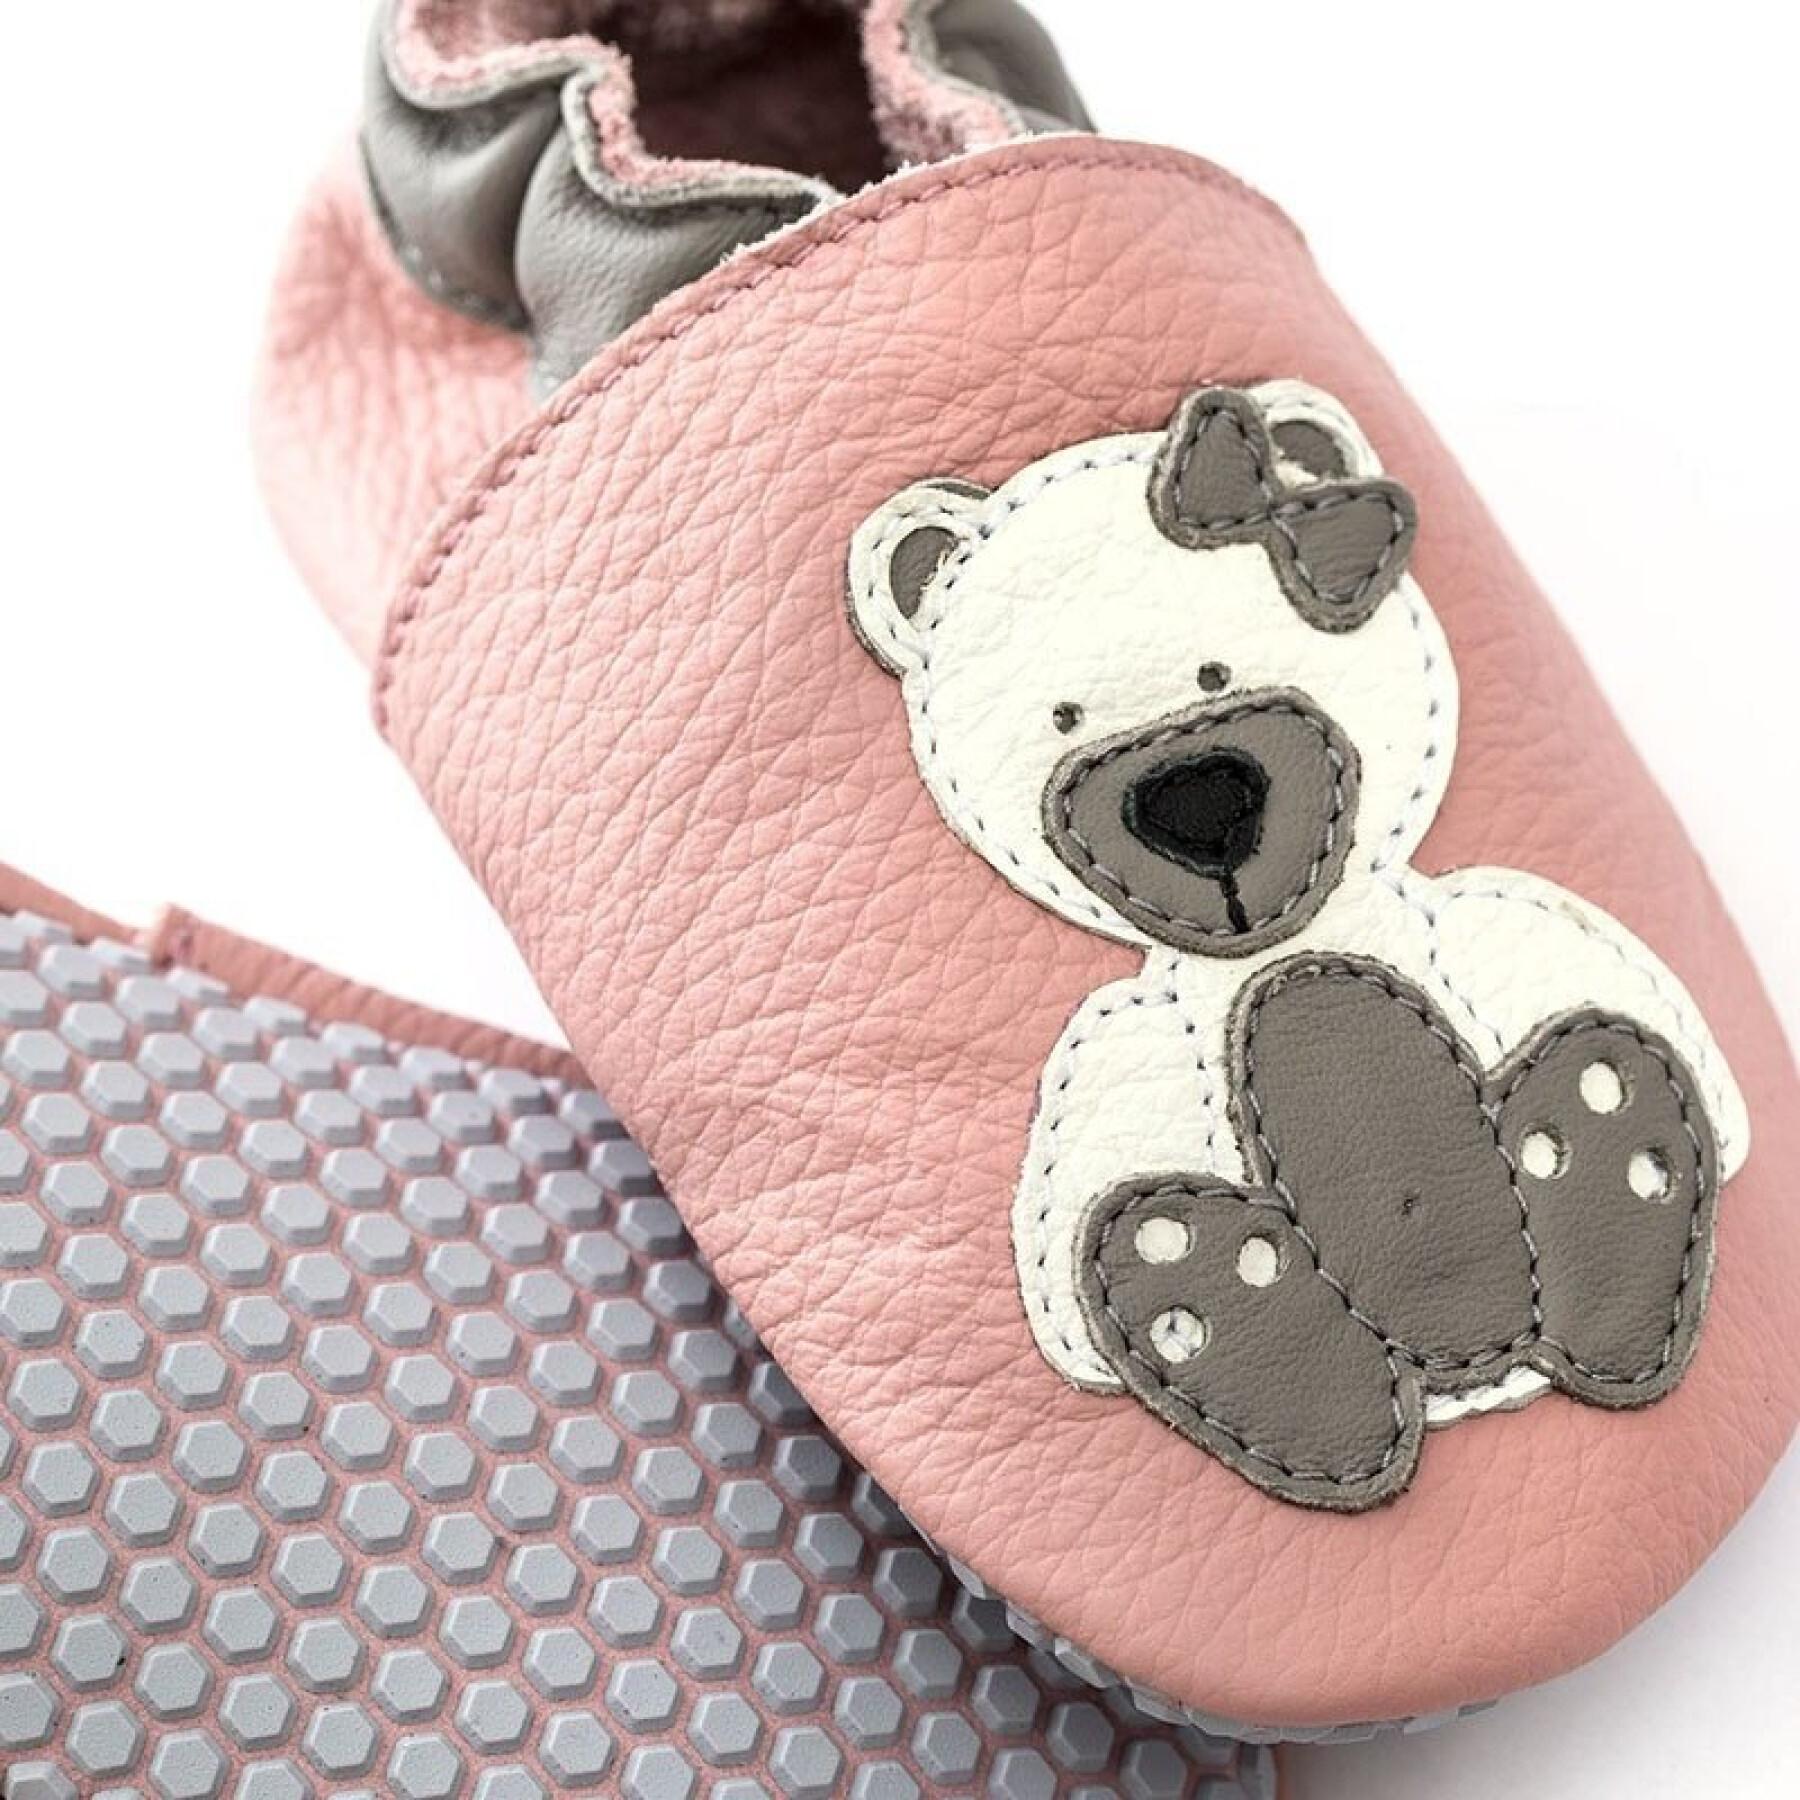 Baby girl soft slippers Liliputi Polar Teddy